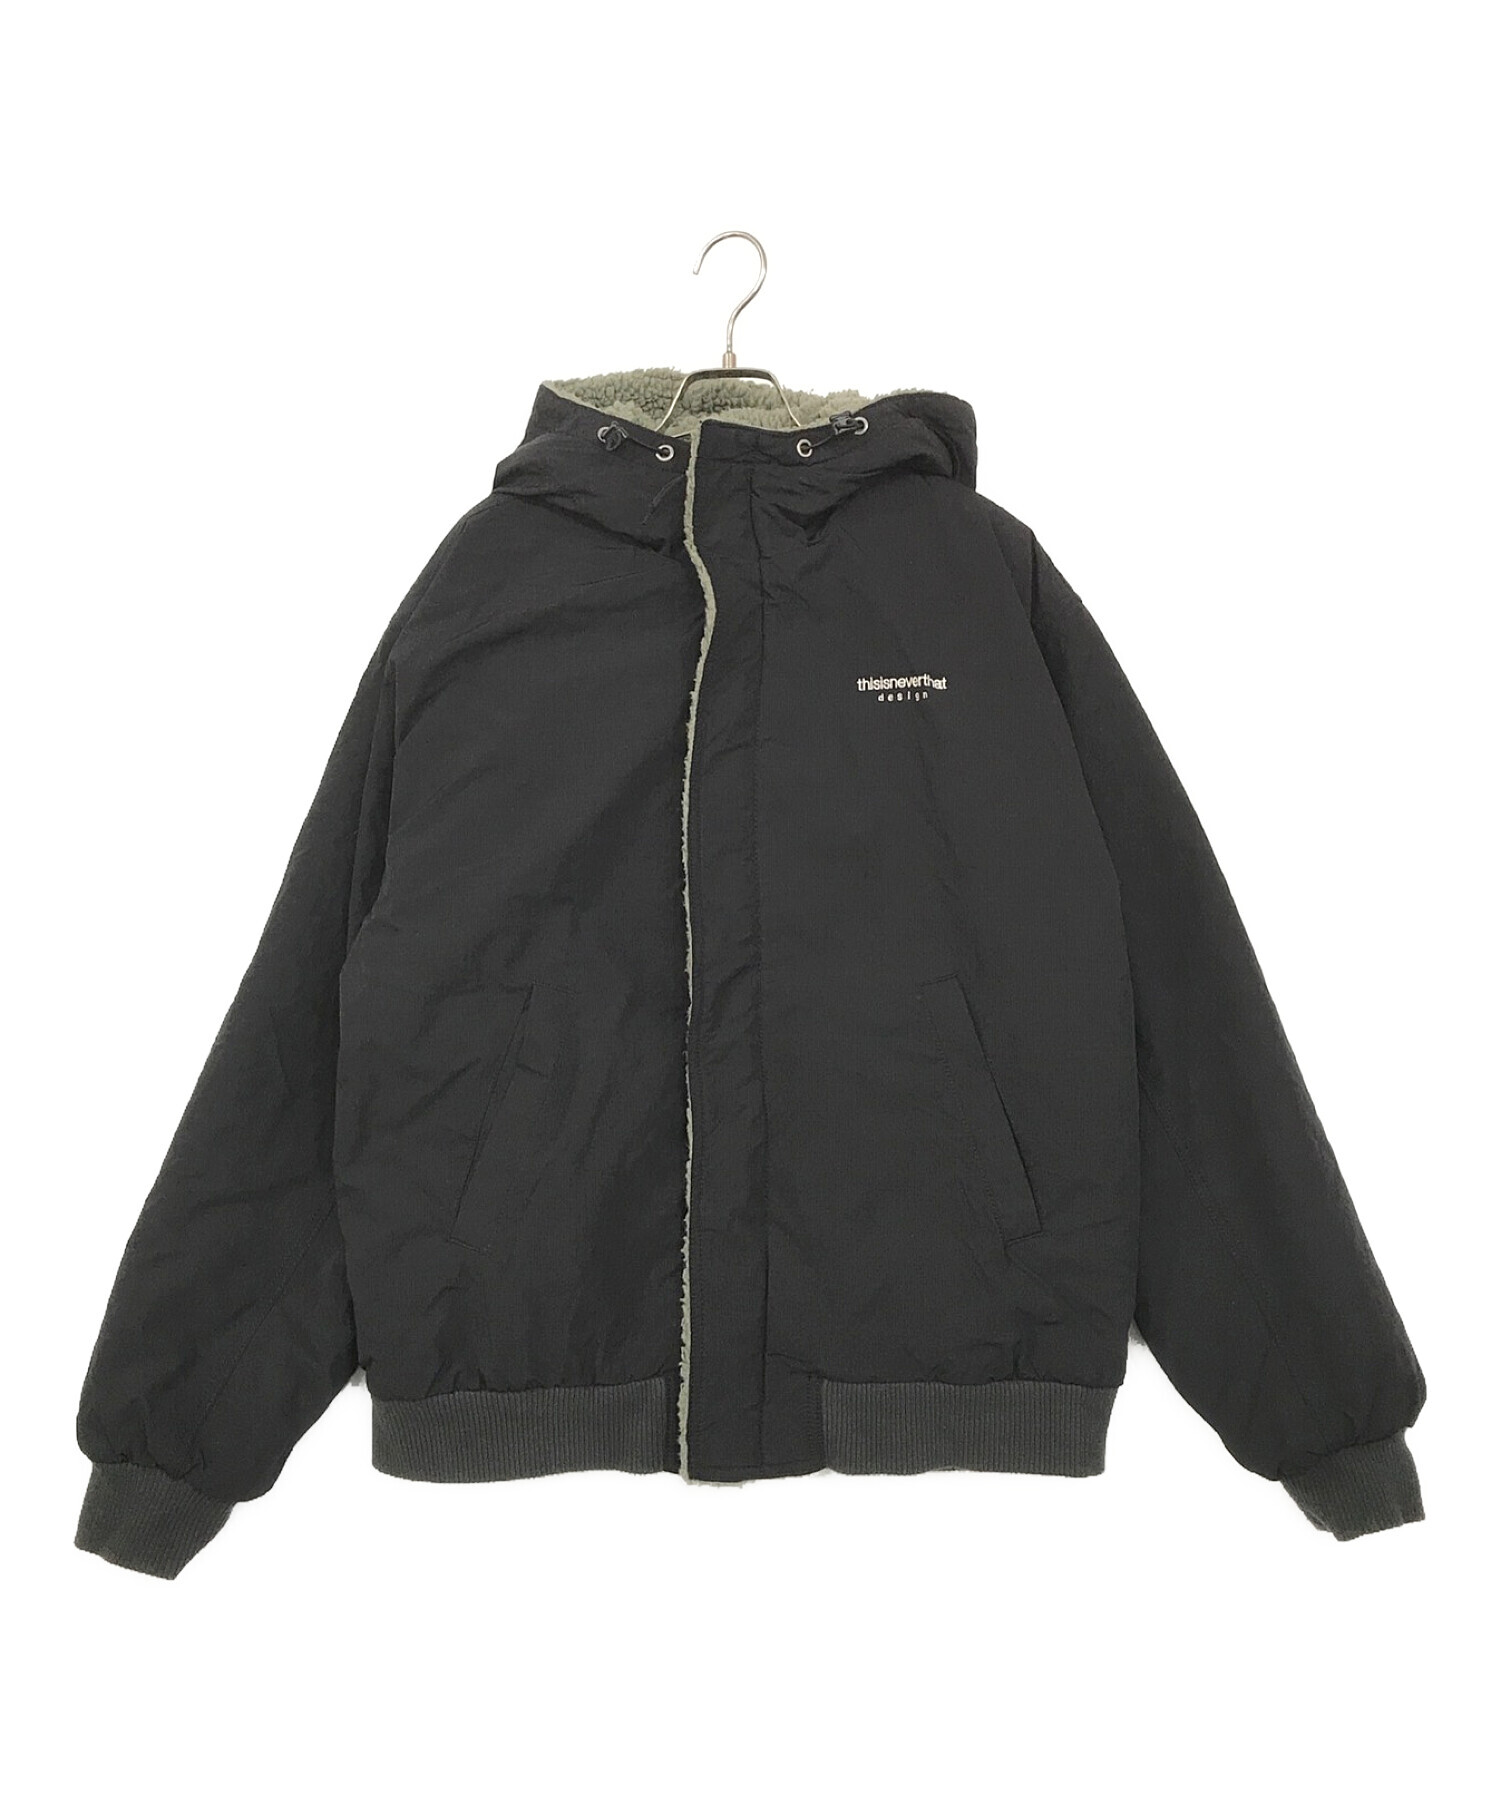 thisisneverthat reversible sherpa jacket購入先…ZOZOTOWN